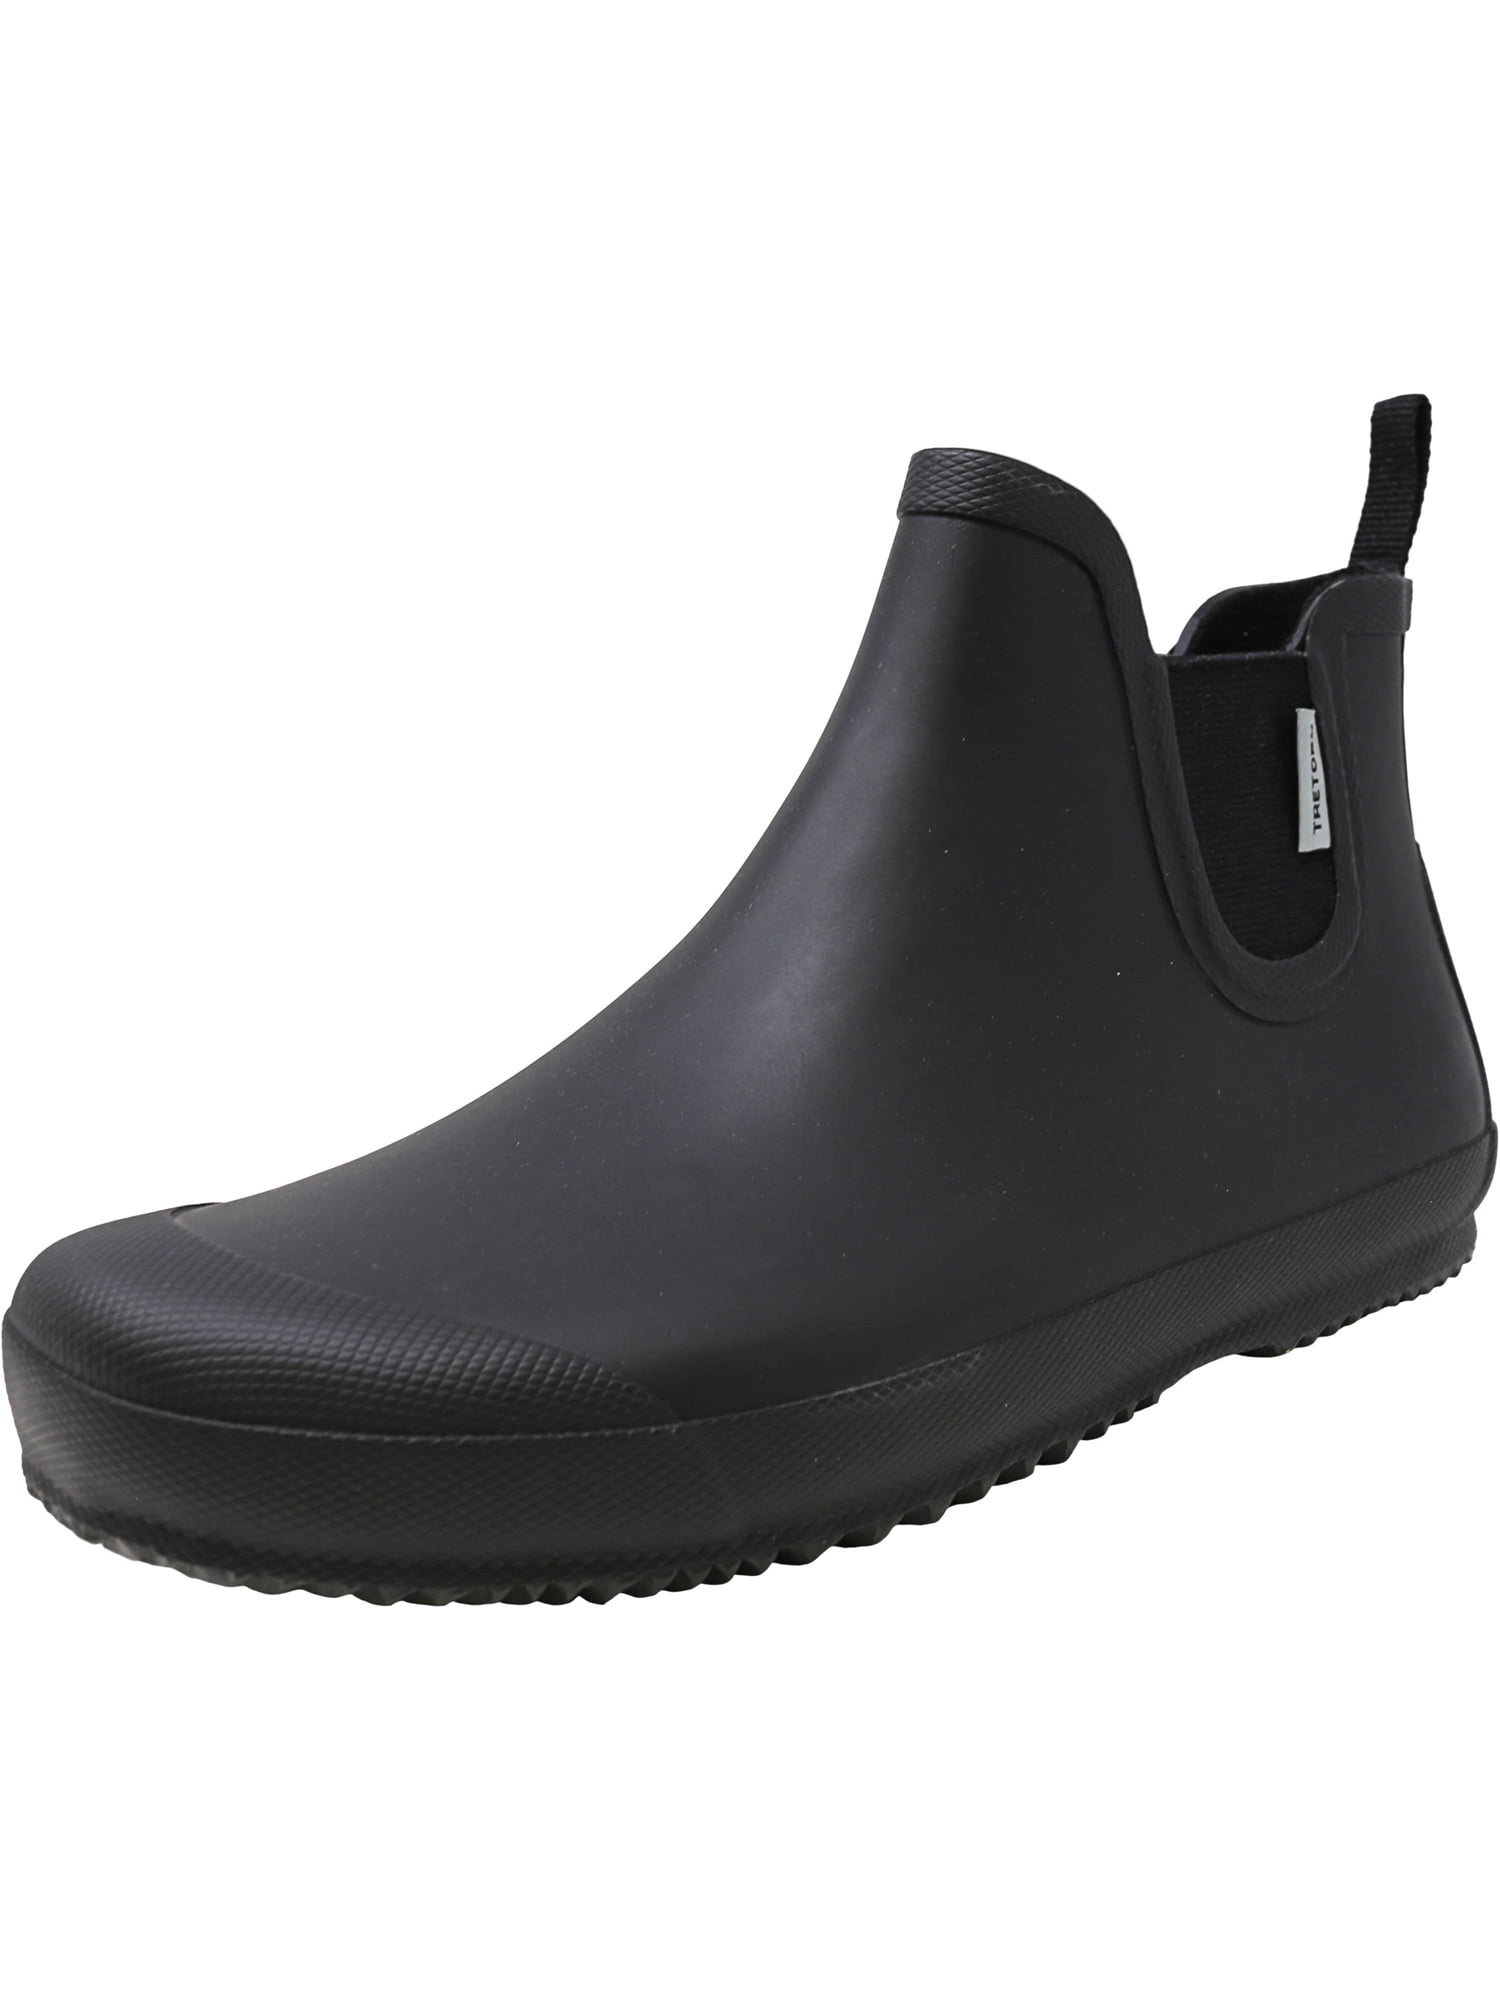 Tretorn Men's BO Slip On Waterproof Rain Boot Shoe - Walmart.com